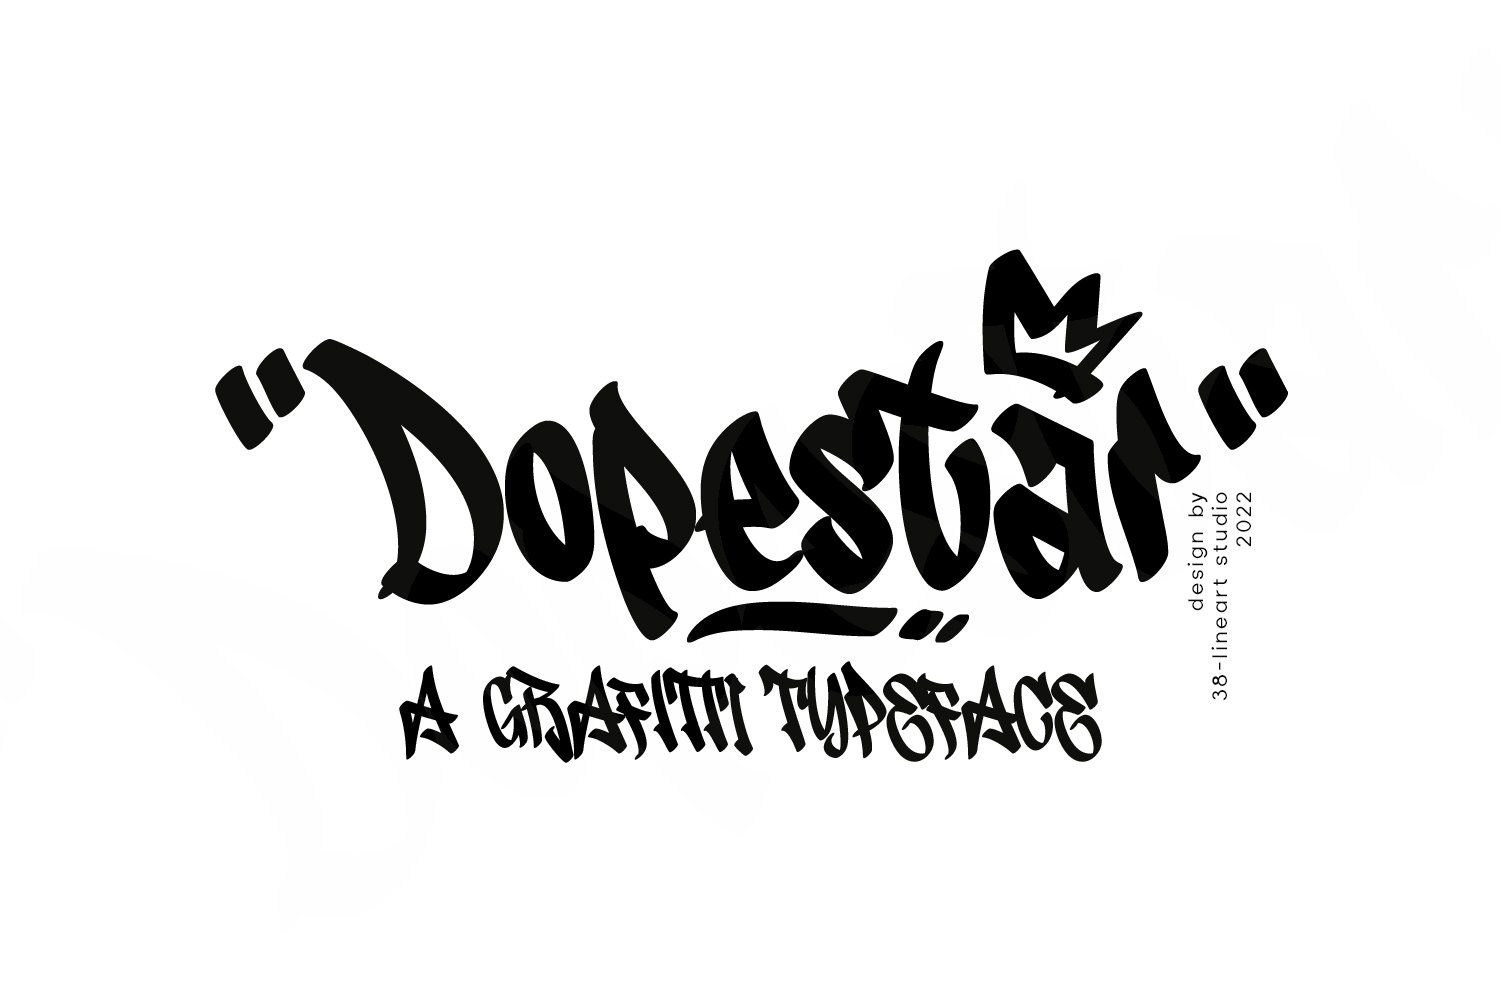 Dopestar - Grafitti Typeface cover image.